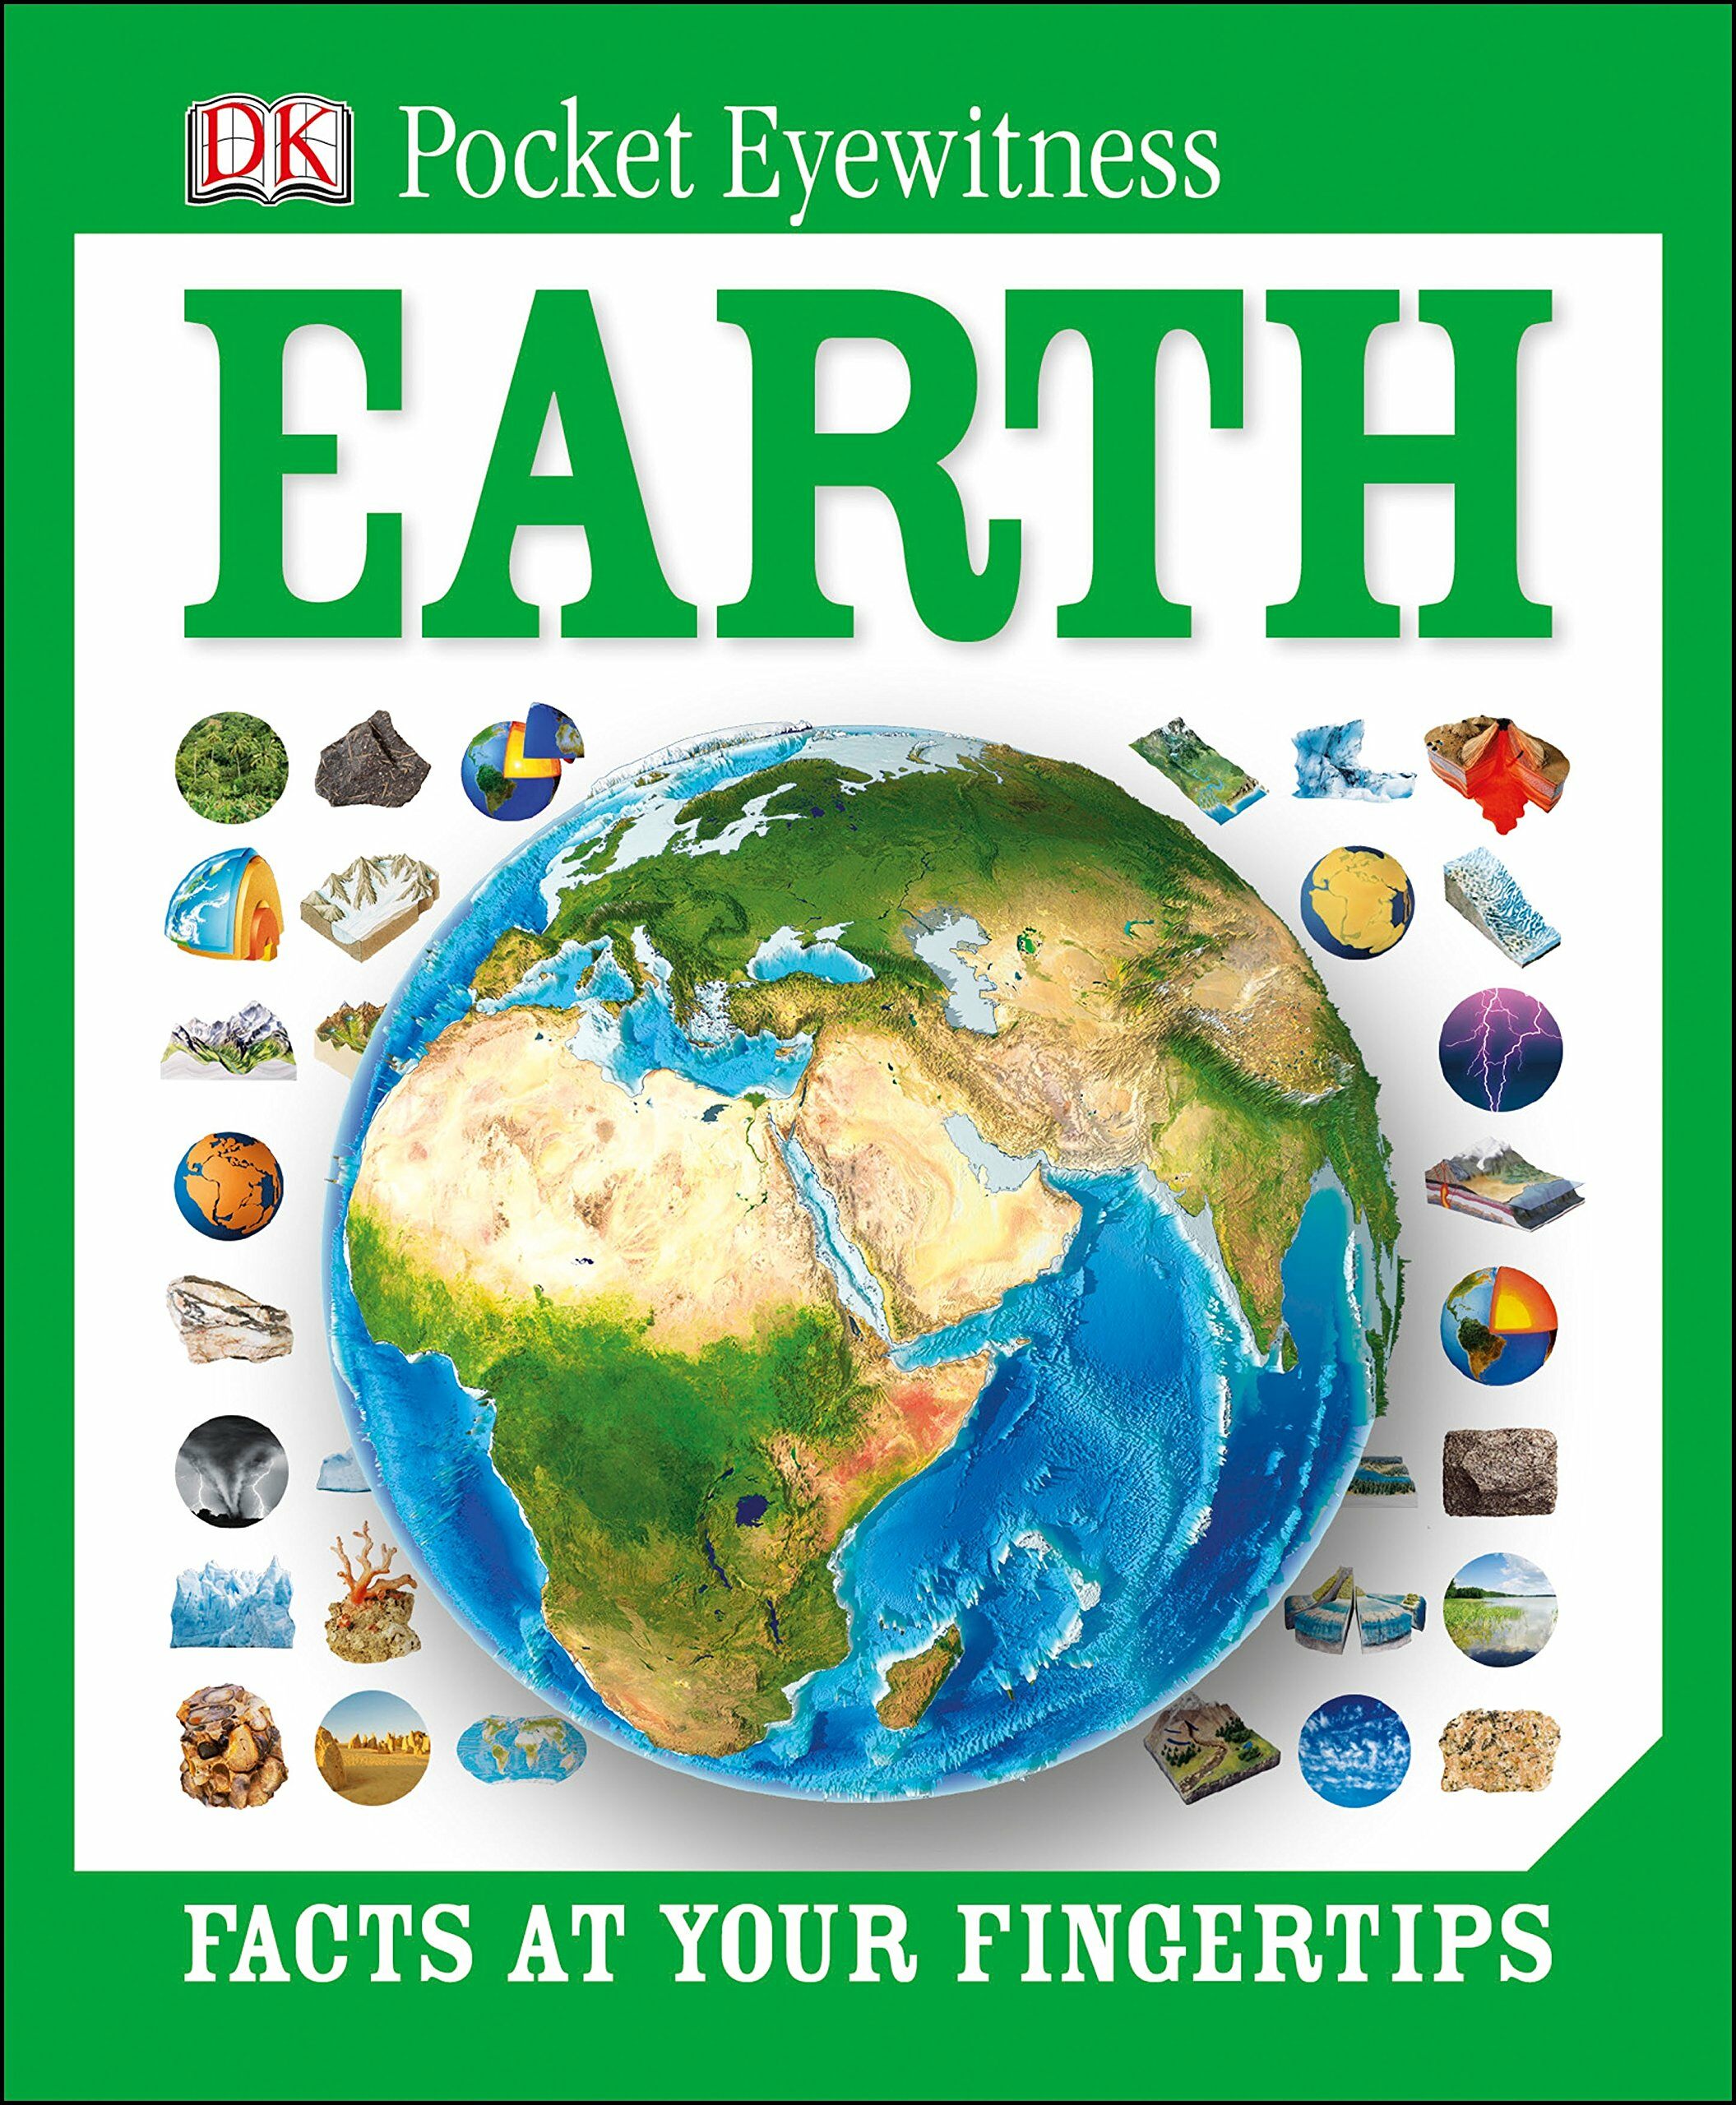 DK Pocket Eyewitness : Earth (Hardcover)